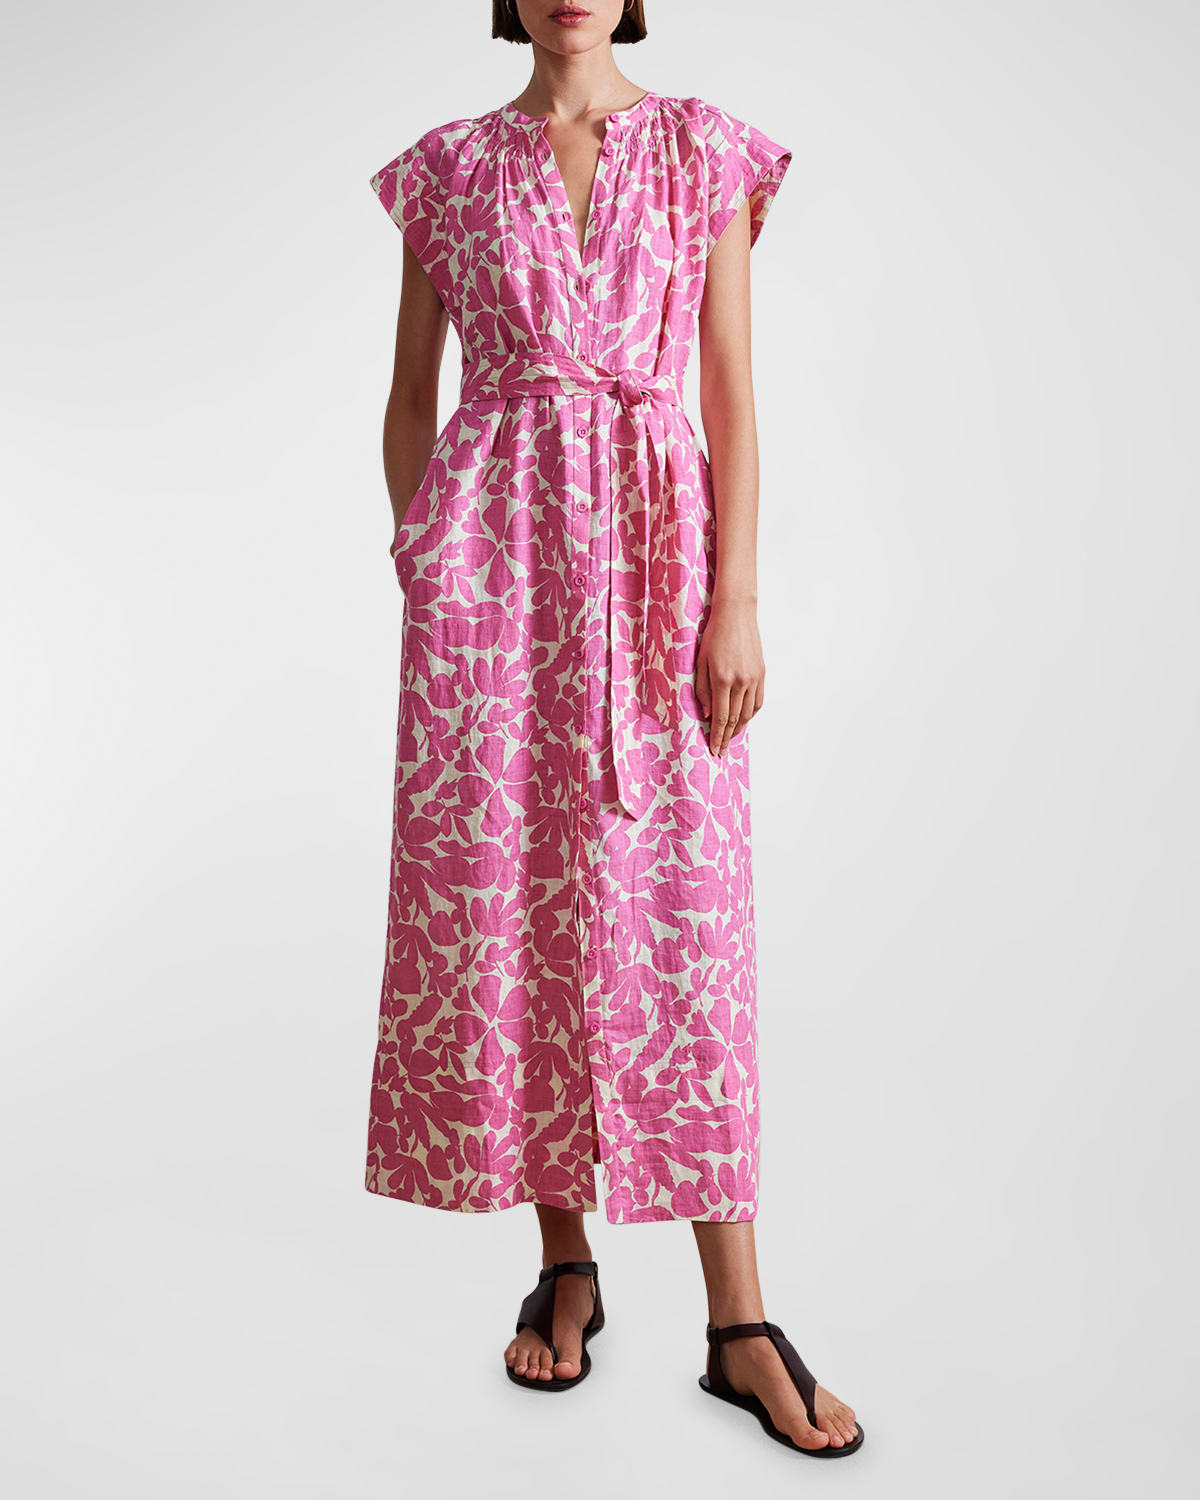 Apiece Apart Mirada Floral Print Shirtdress With Tie Belt In Pink Burst Floral